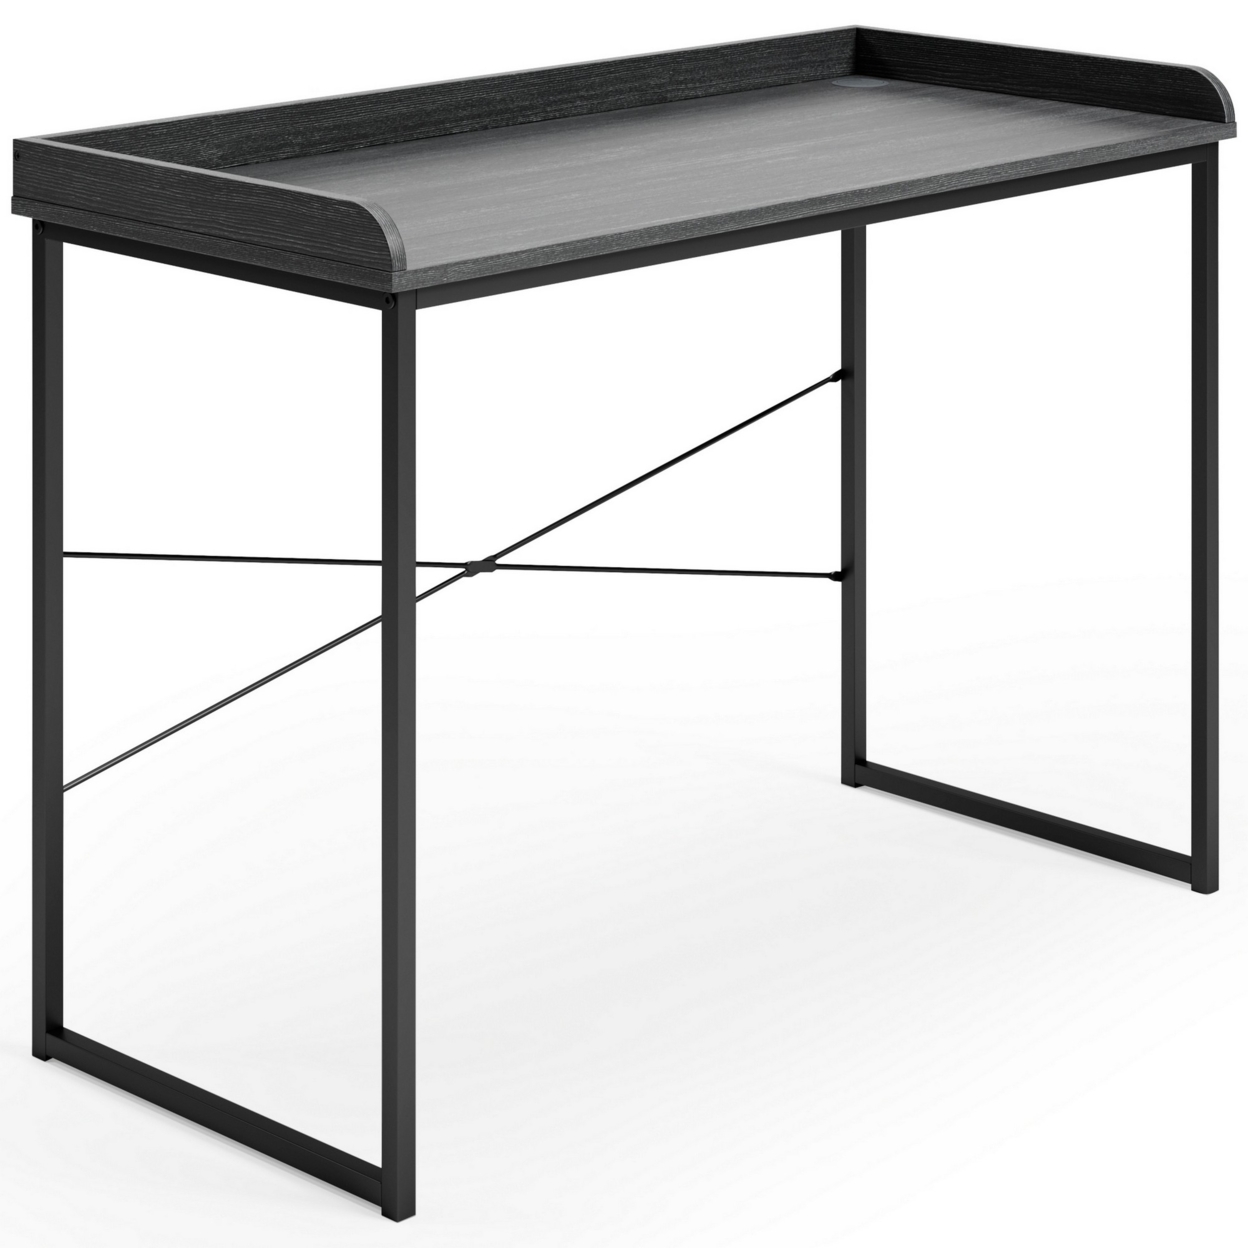 43 Inch Modern Home Office Desk, Wood Top With Rails, Black Metal Frame